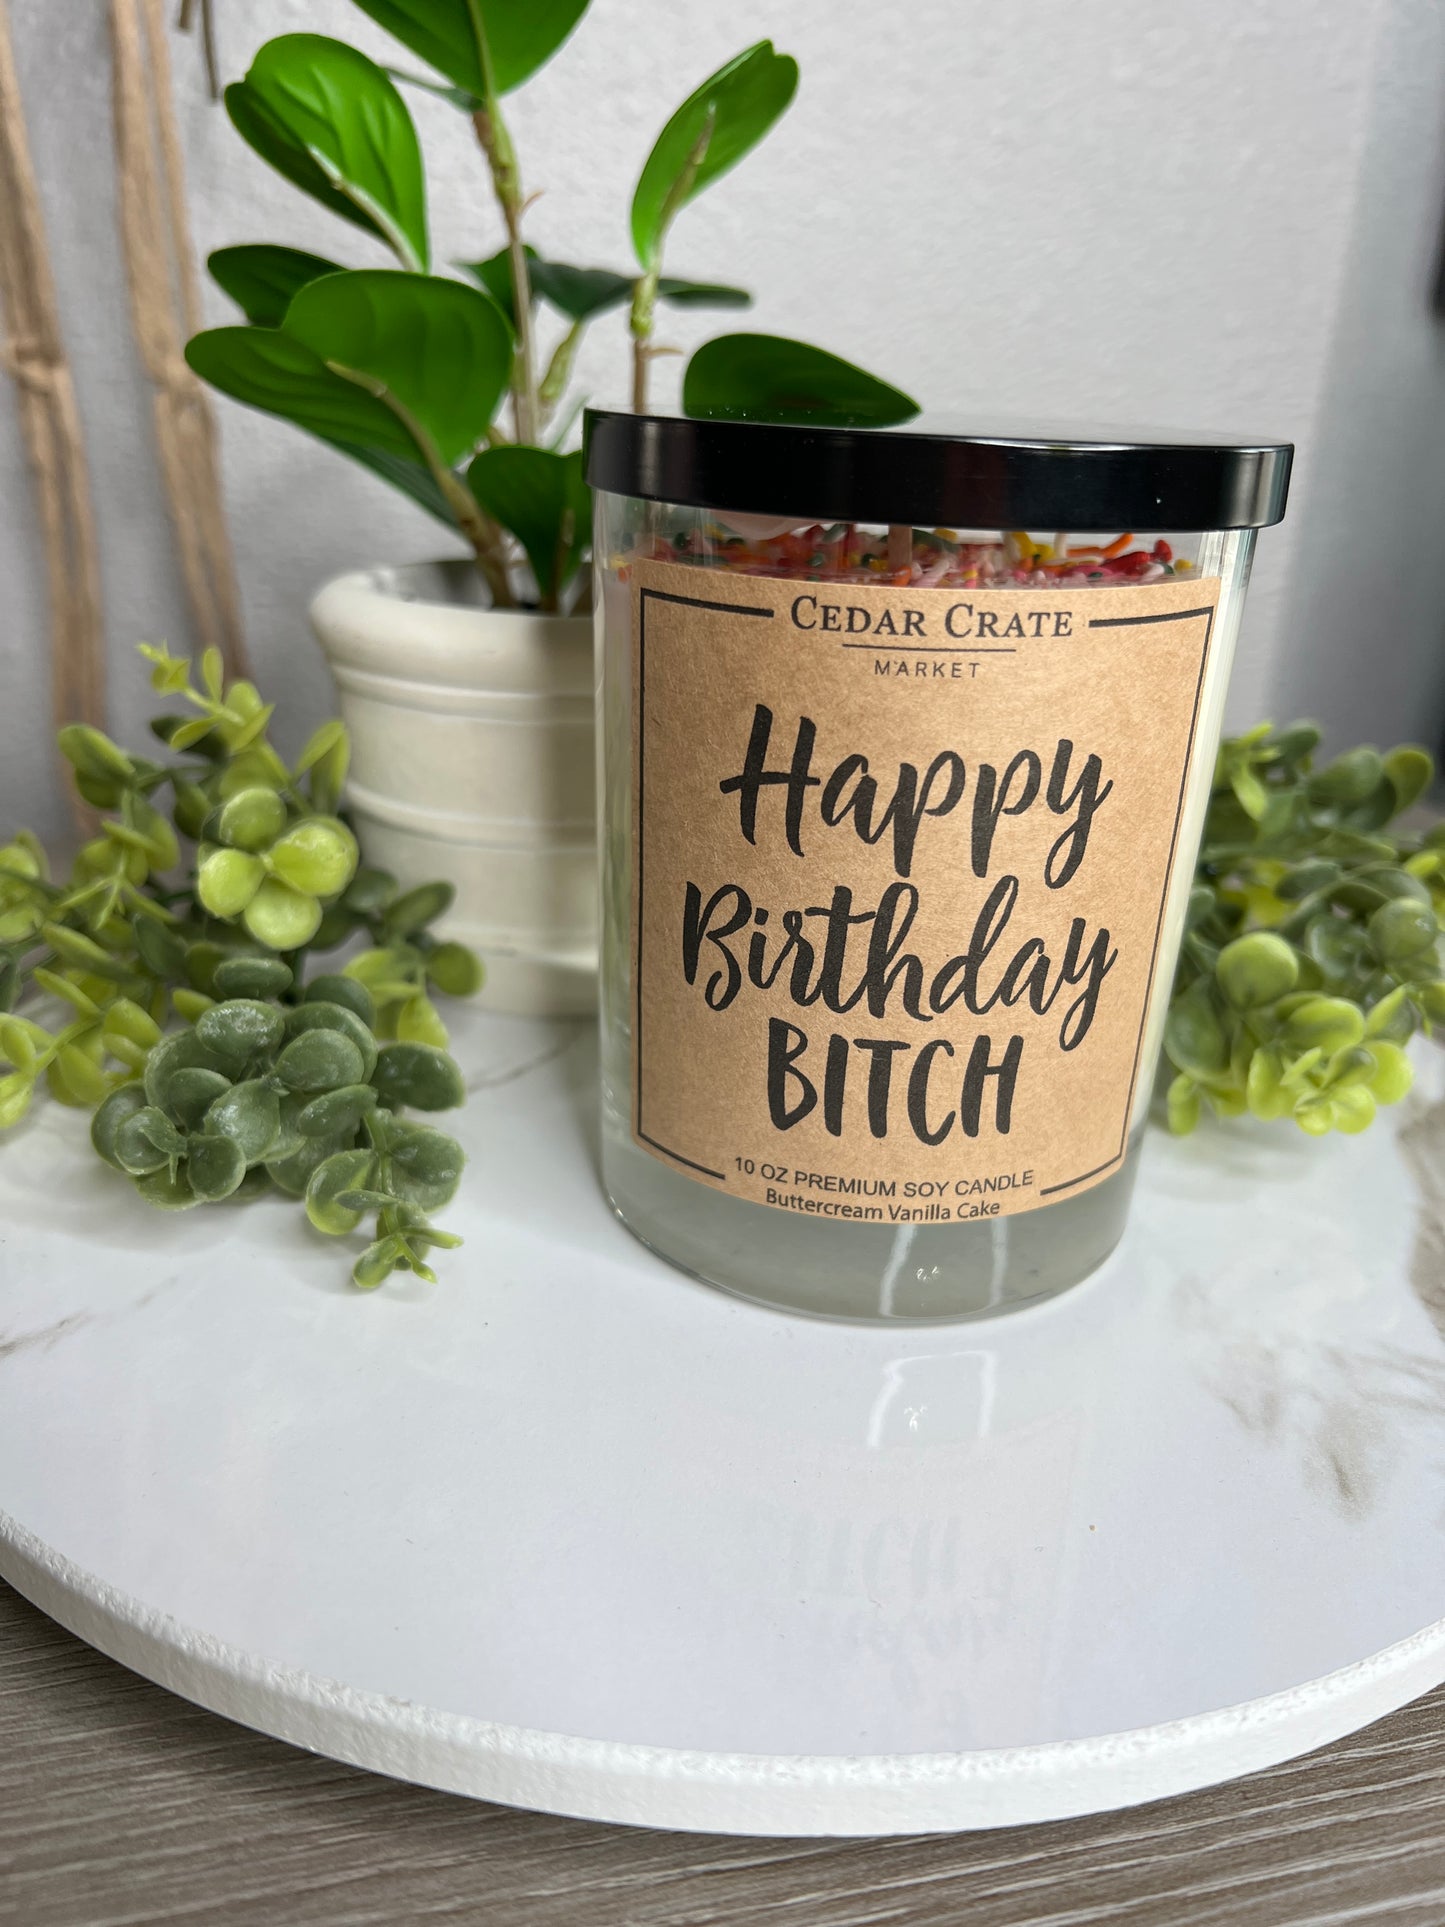 Happy Birthday Bitch Soy Candle